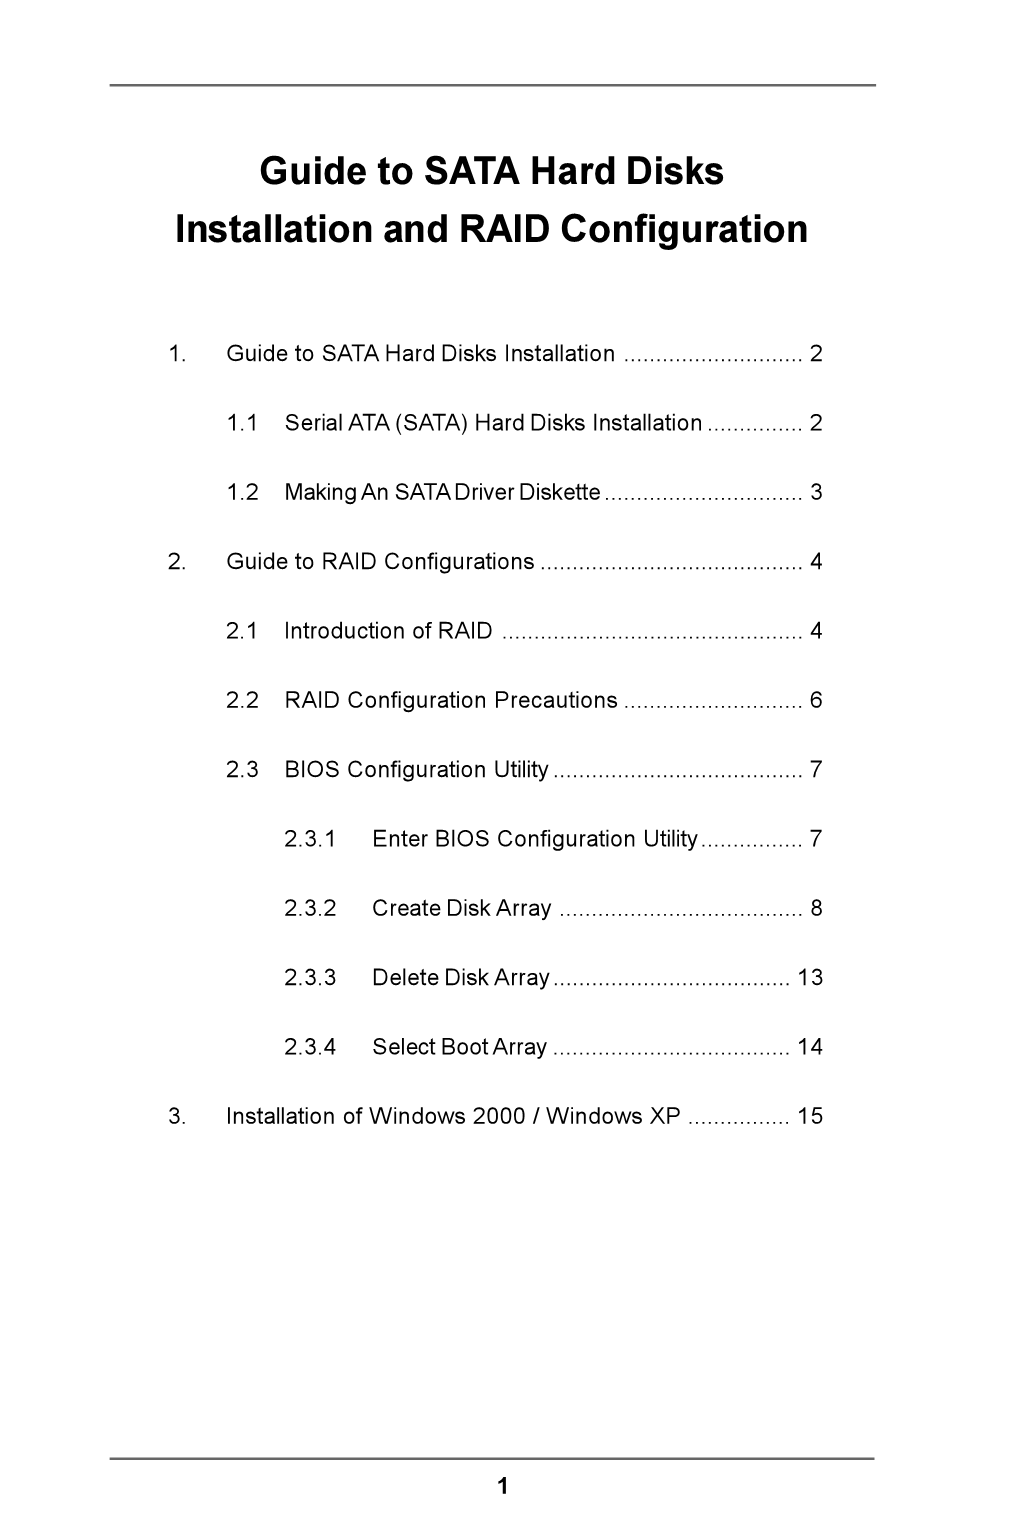 Guide to SATA Hard Disks Installation and RAID Configuration